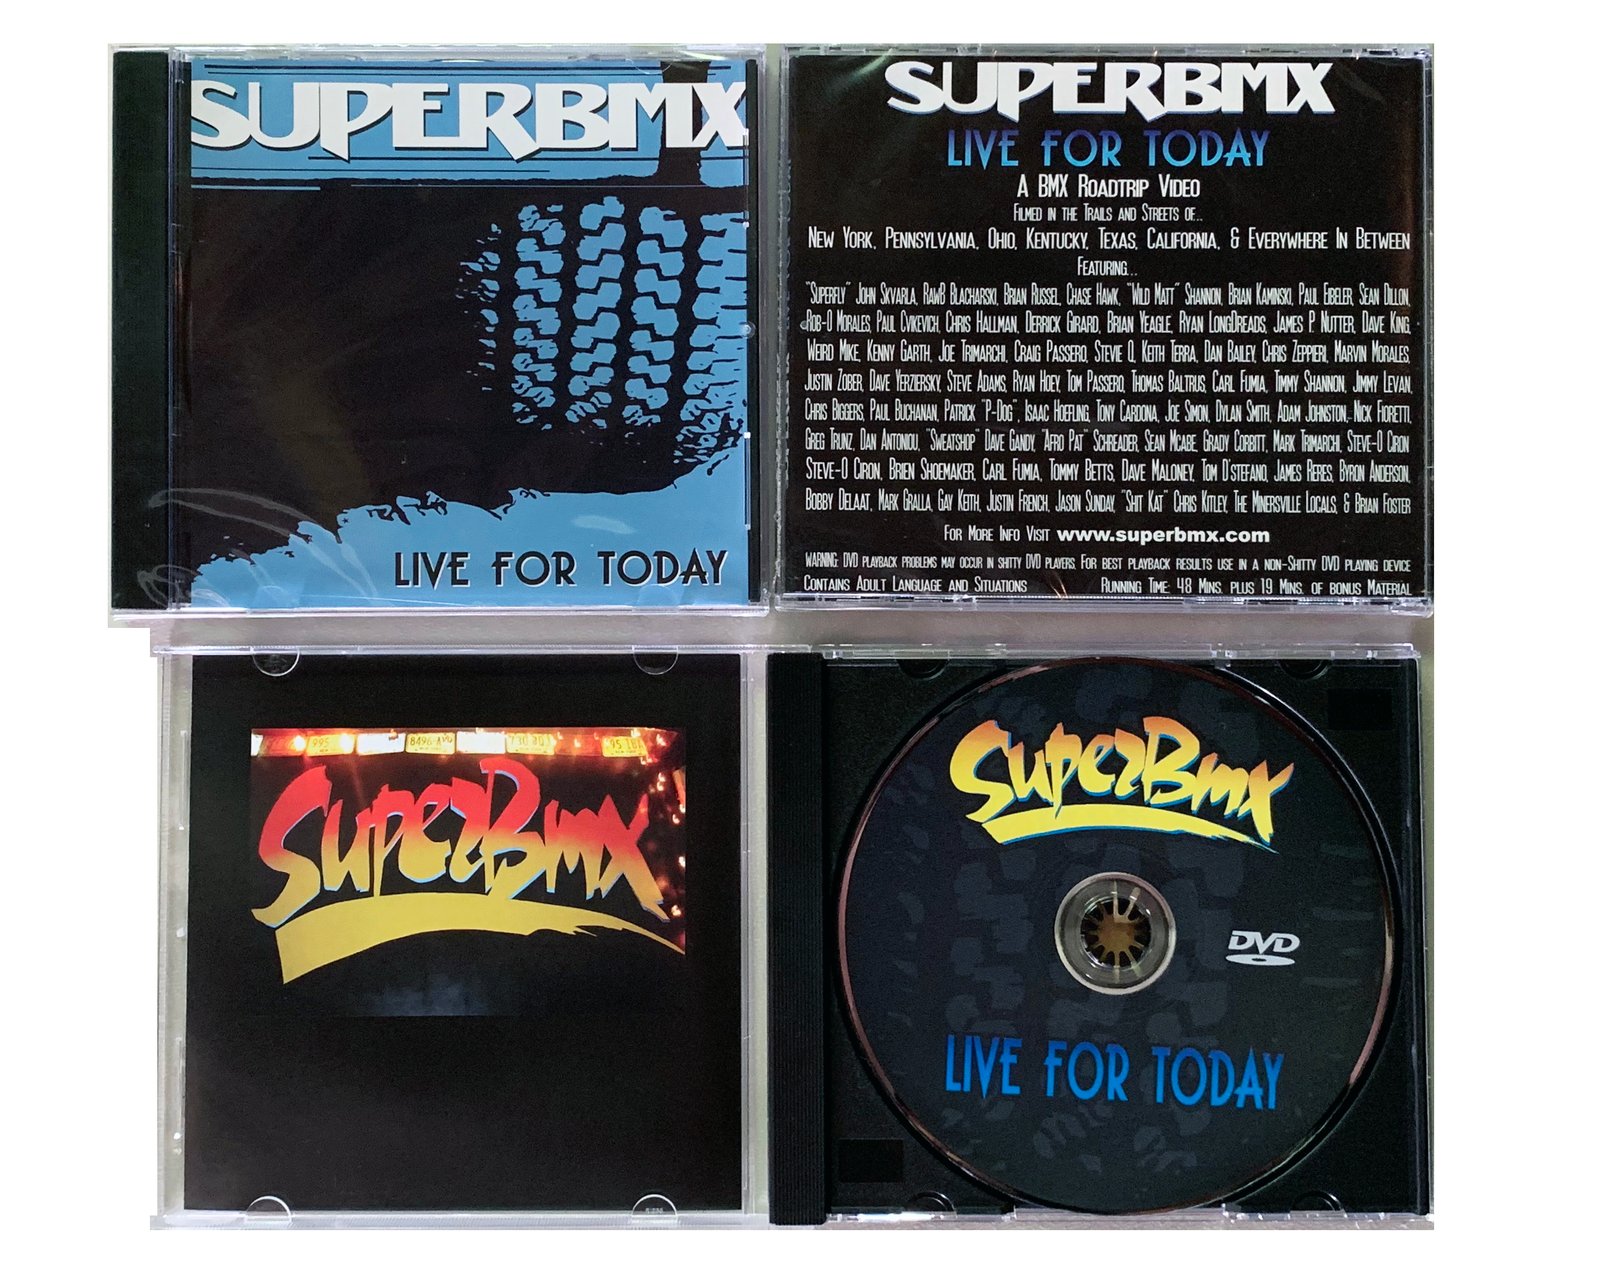 SuperBmx Live For Today DVD